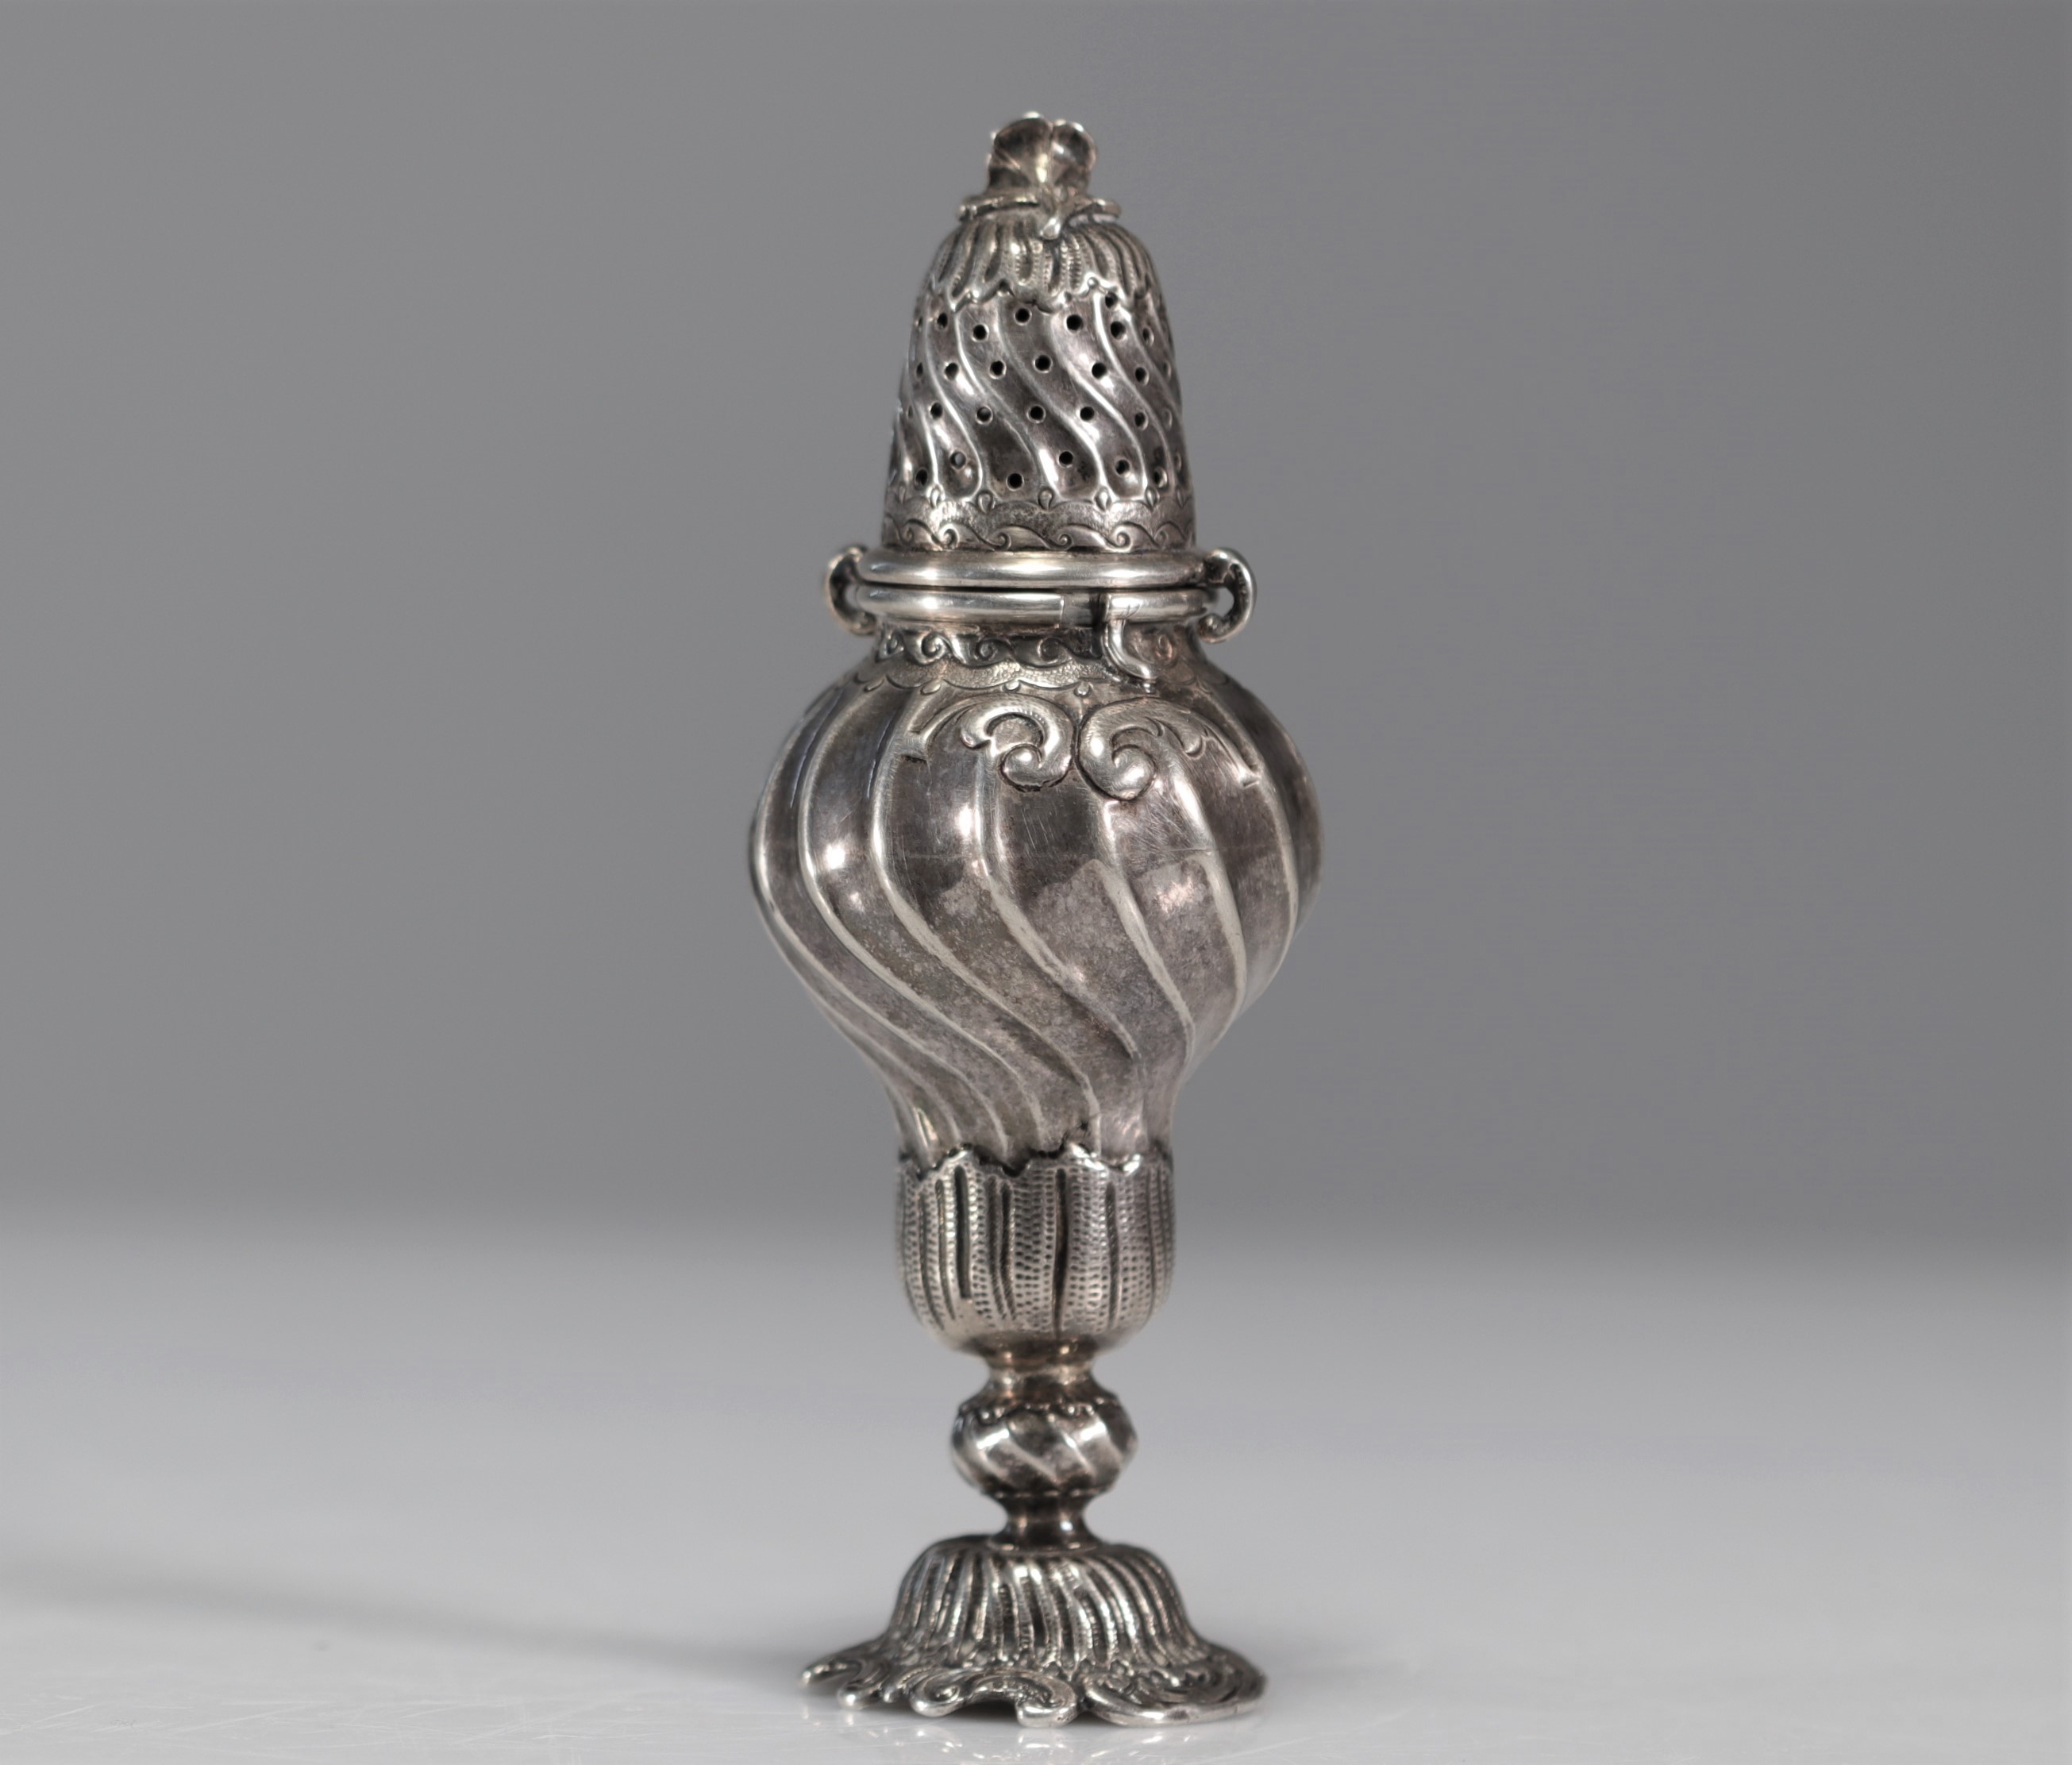 Francois-Thomas GERMAIN (1726-1791) 17th century silverware, Louis XV period